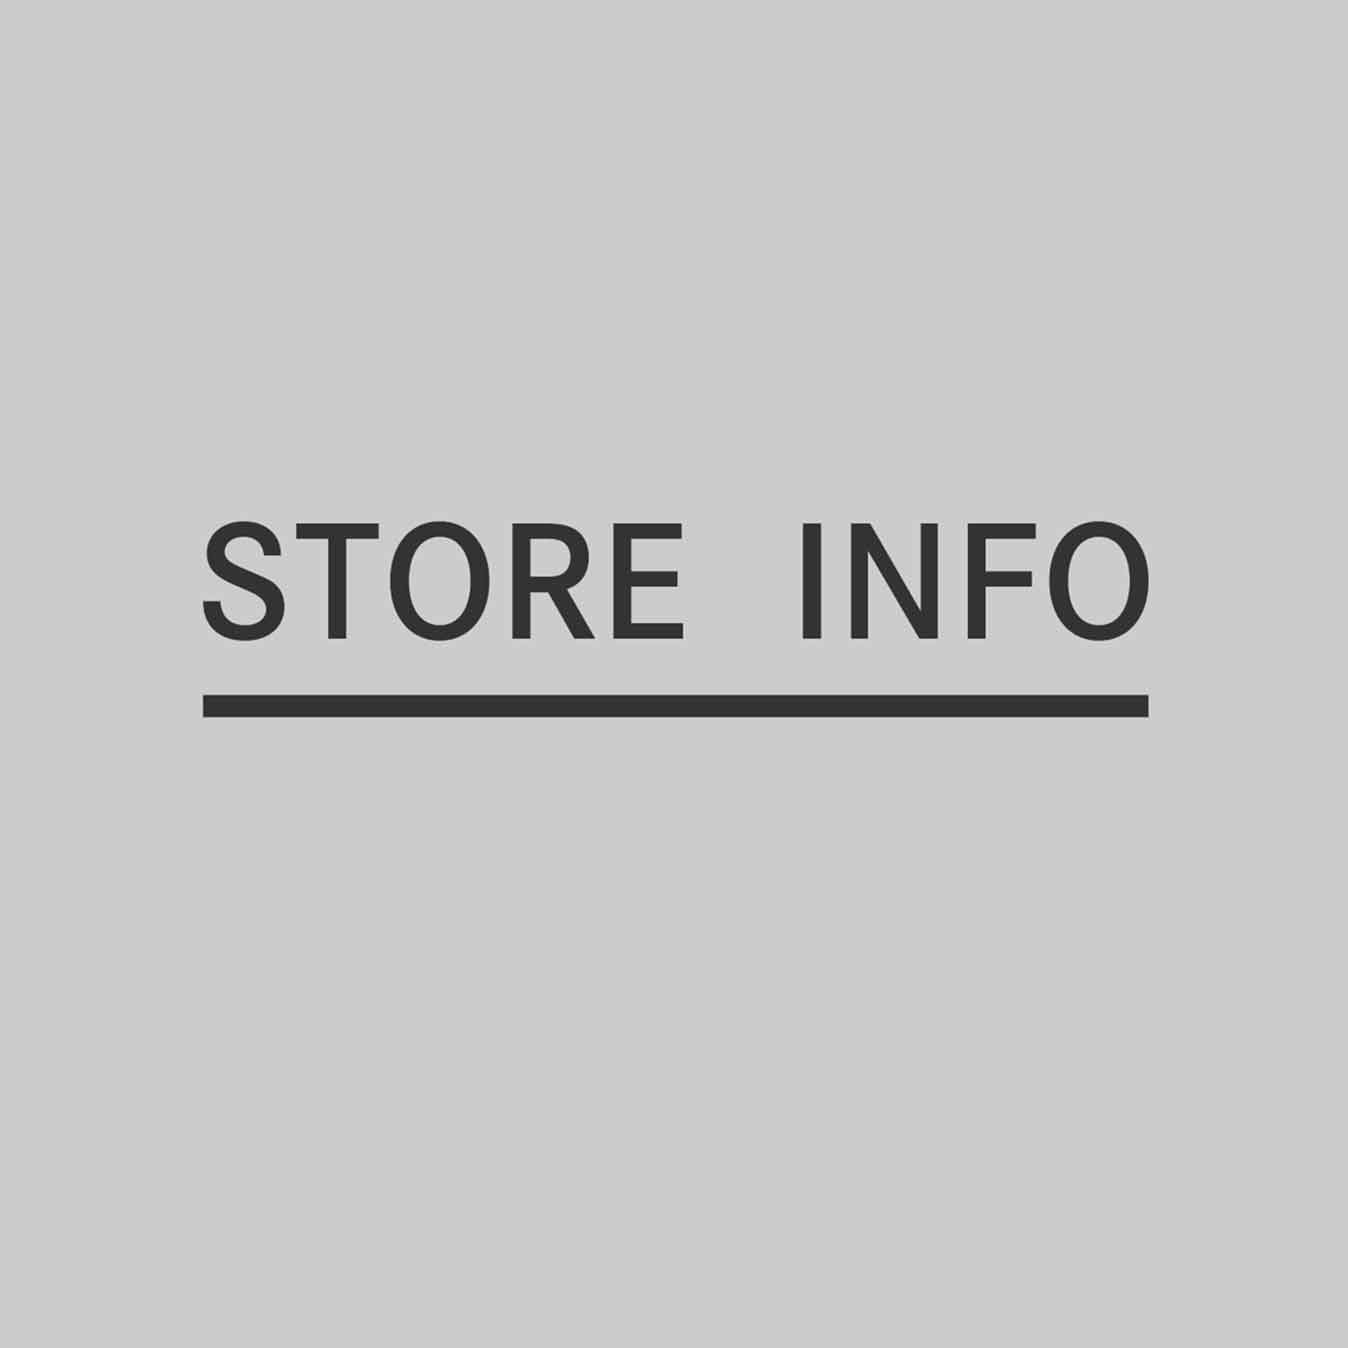 Store Info